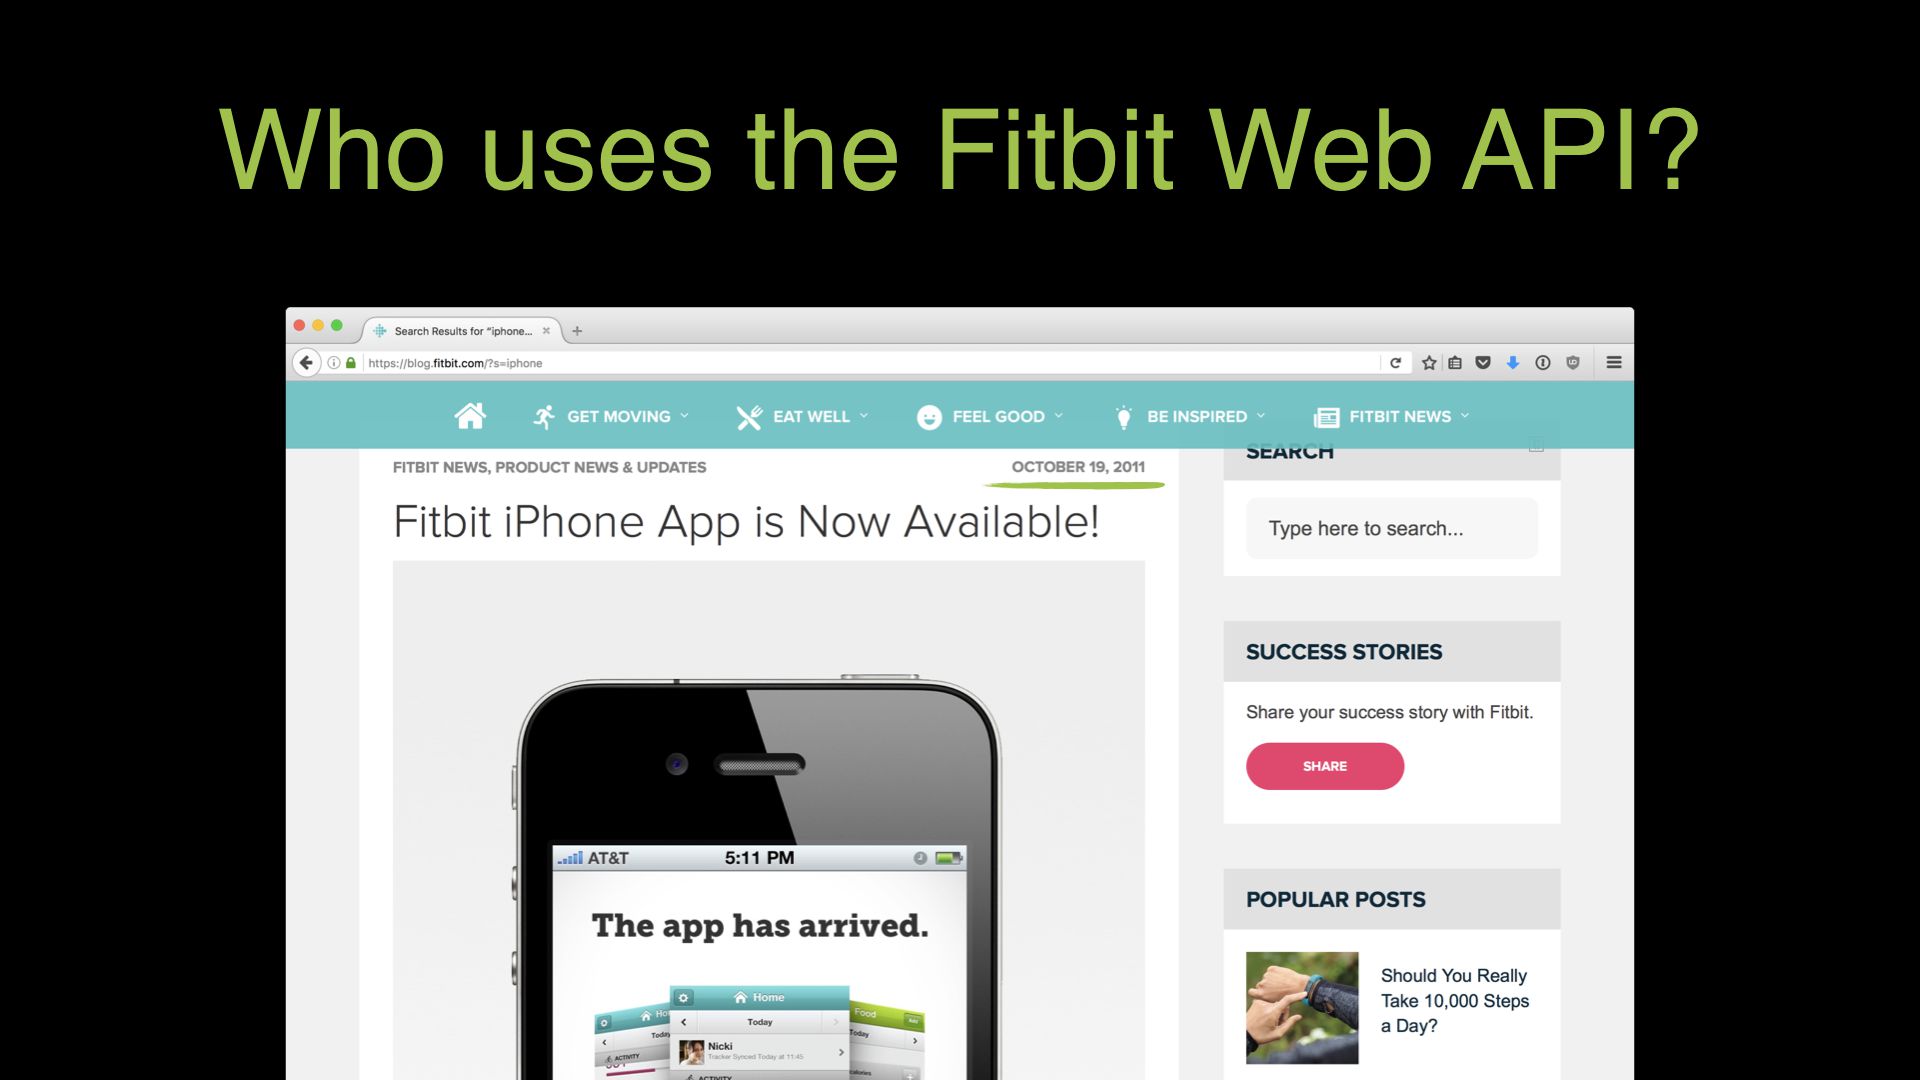 Screenshot of blog post announcing the Fitbit iPhone app